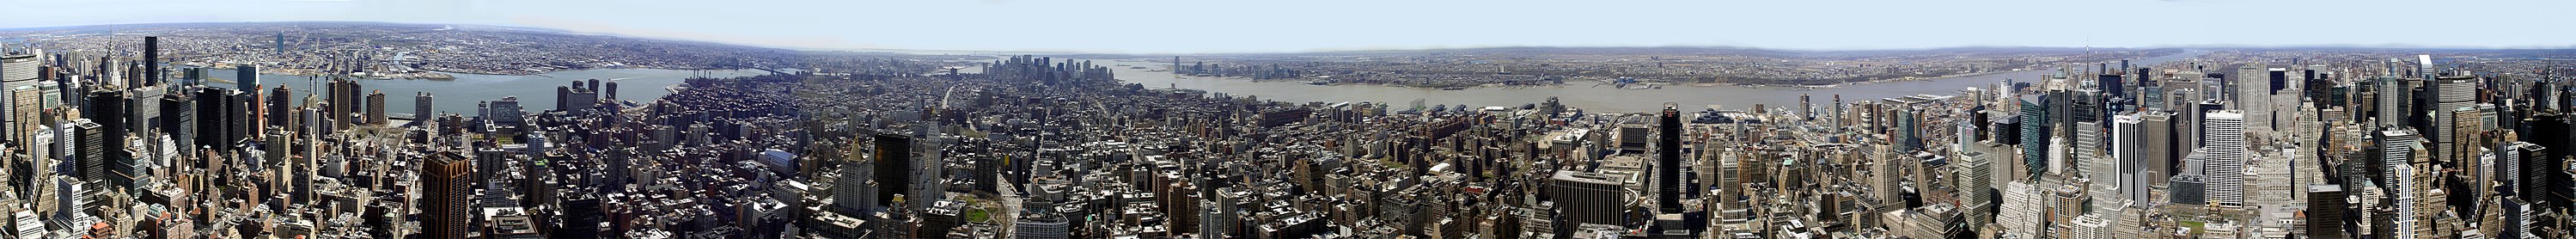 360°-Panorama, Manhattan vom Empire State Building bei Tag